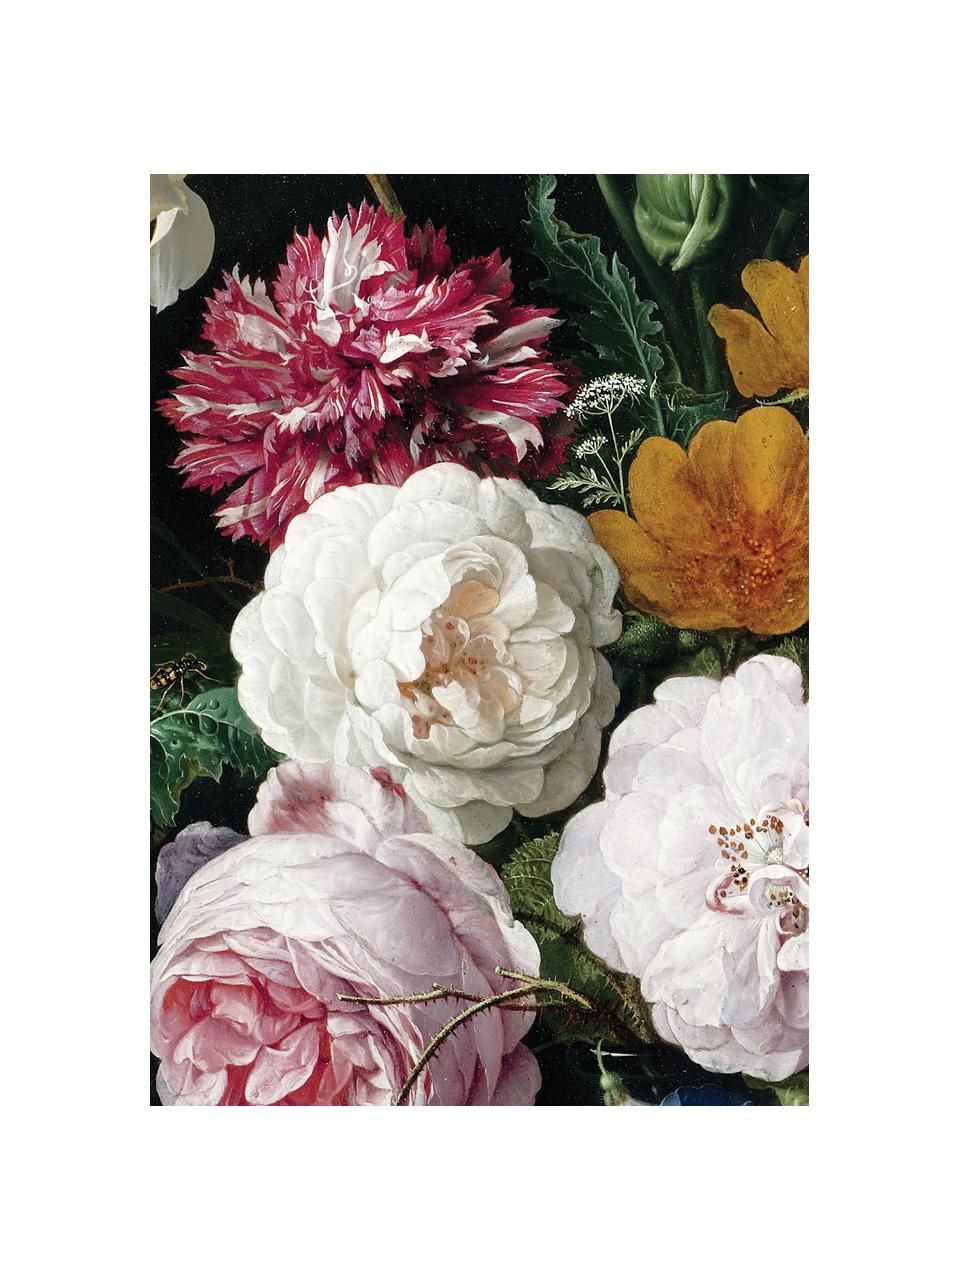 Papel pintado Golden Age Flowers, Tejido no tejido, ecológica y biodegradable, Multicolor mate, An 196 x Al 280 cm